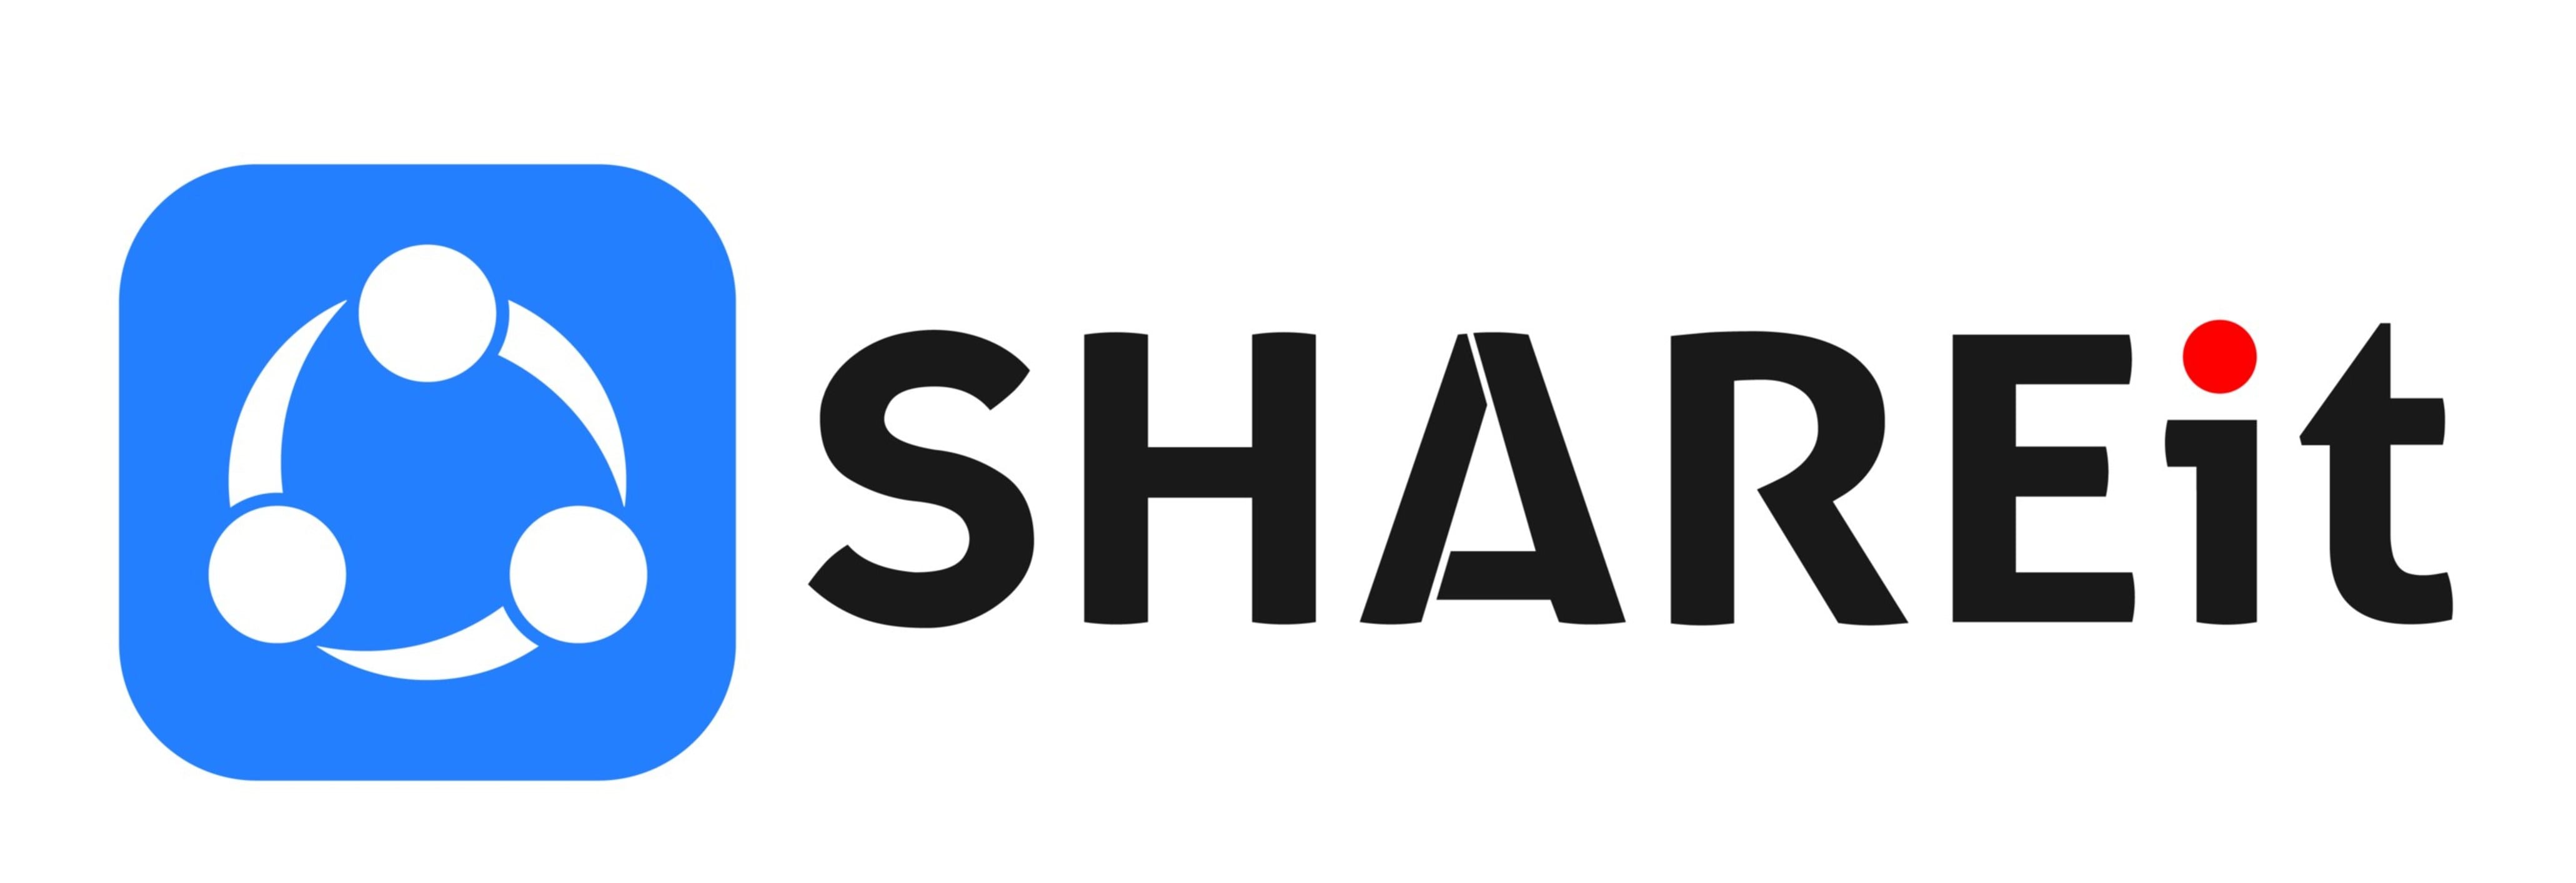 shareit-1.jpg